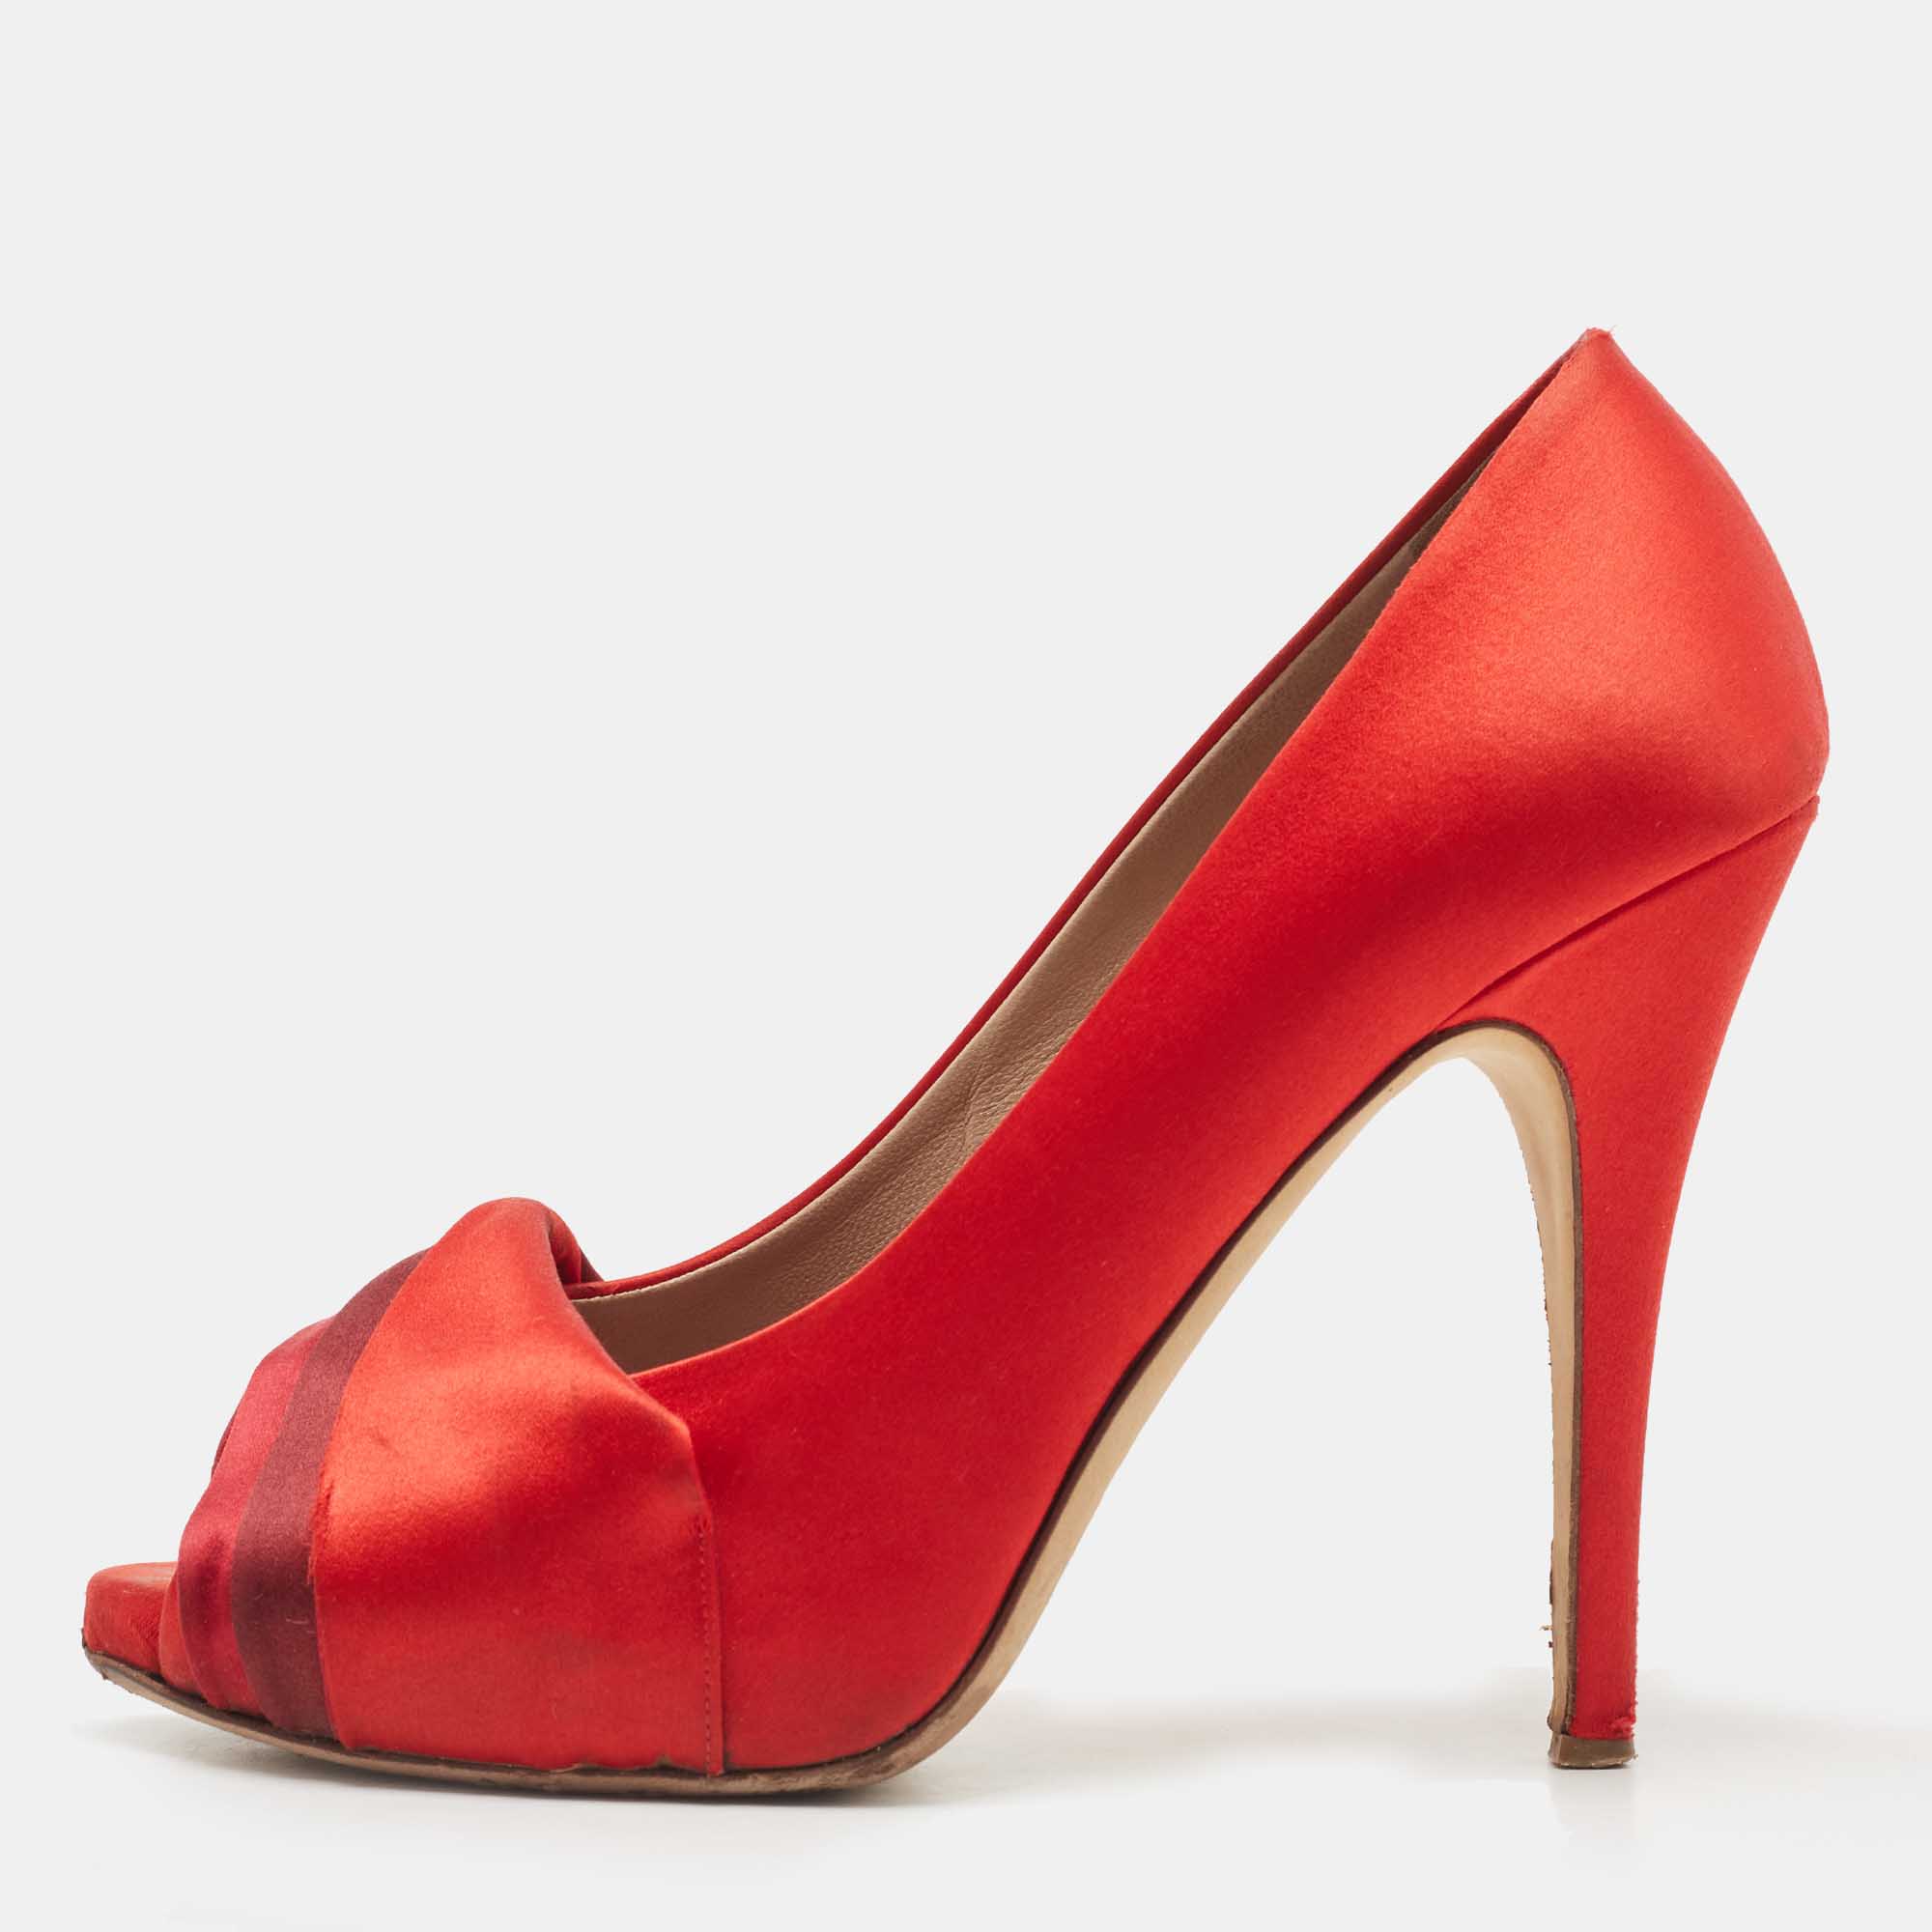 Valentino red pleated satin peep toe pumps size 39